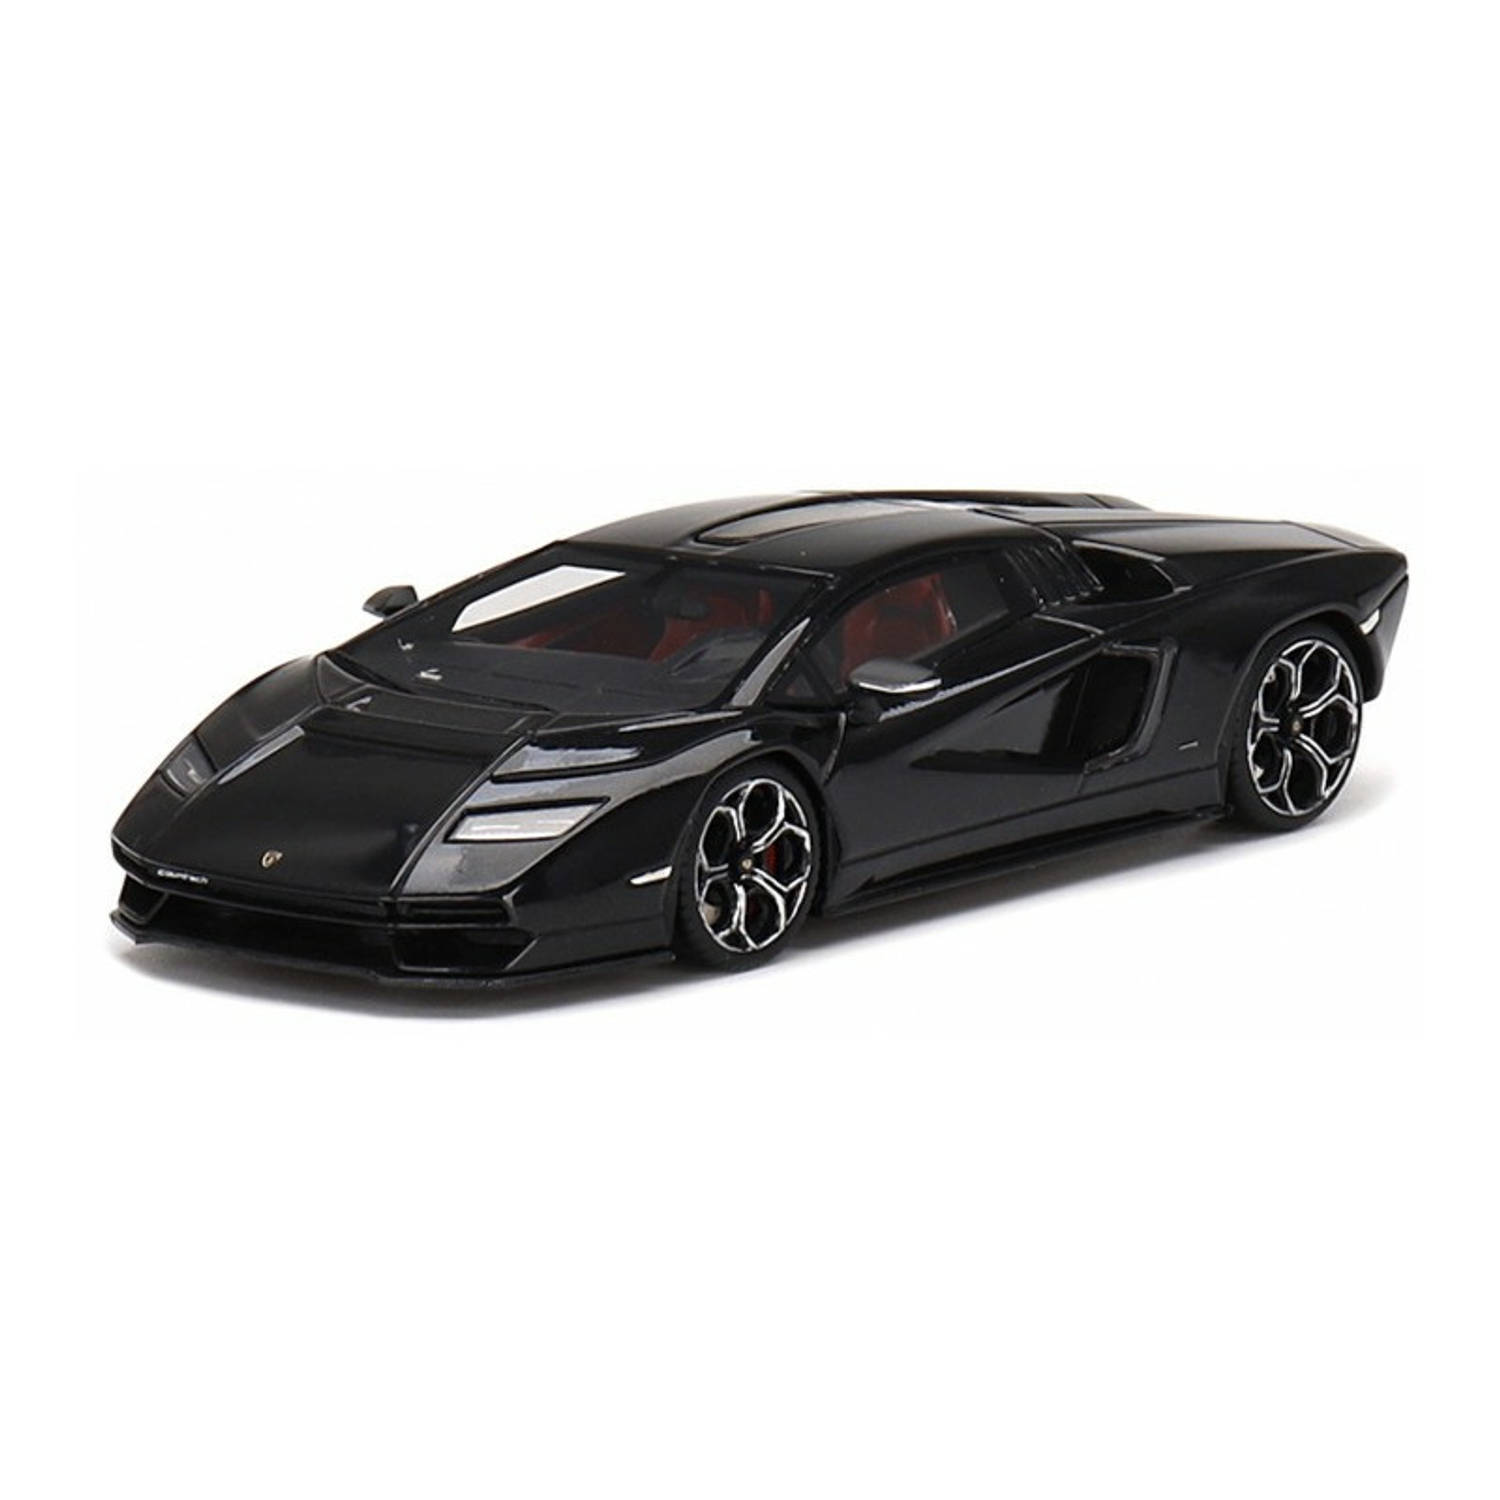 Maisto modelauto/speelgoedauto Lamborghini Countach - zwart - schaal 1:18/27 x 11 x 6 cm